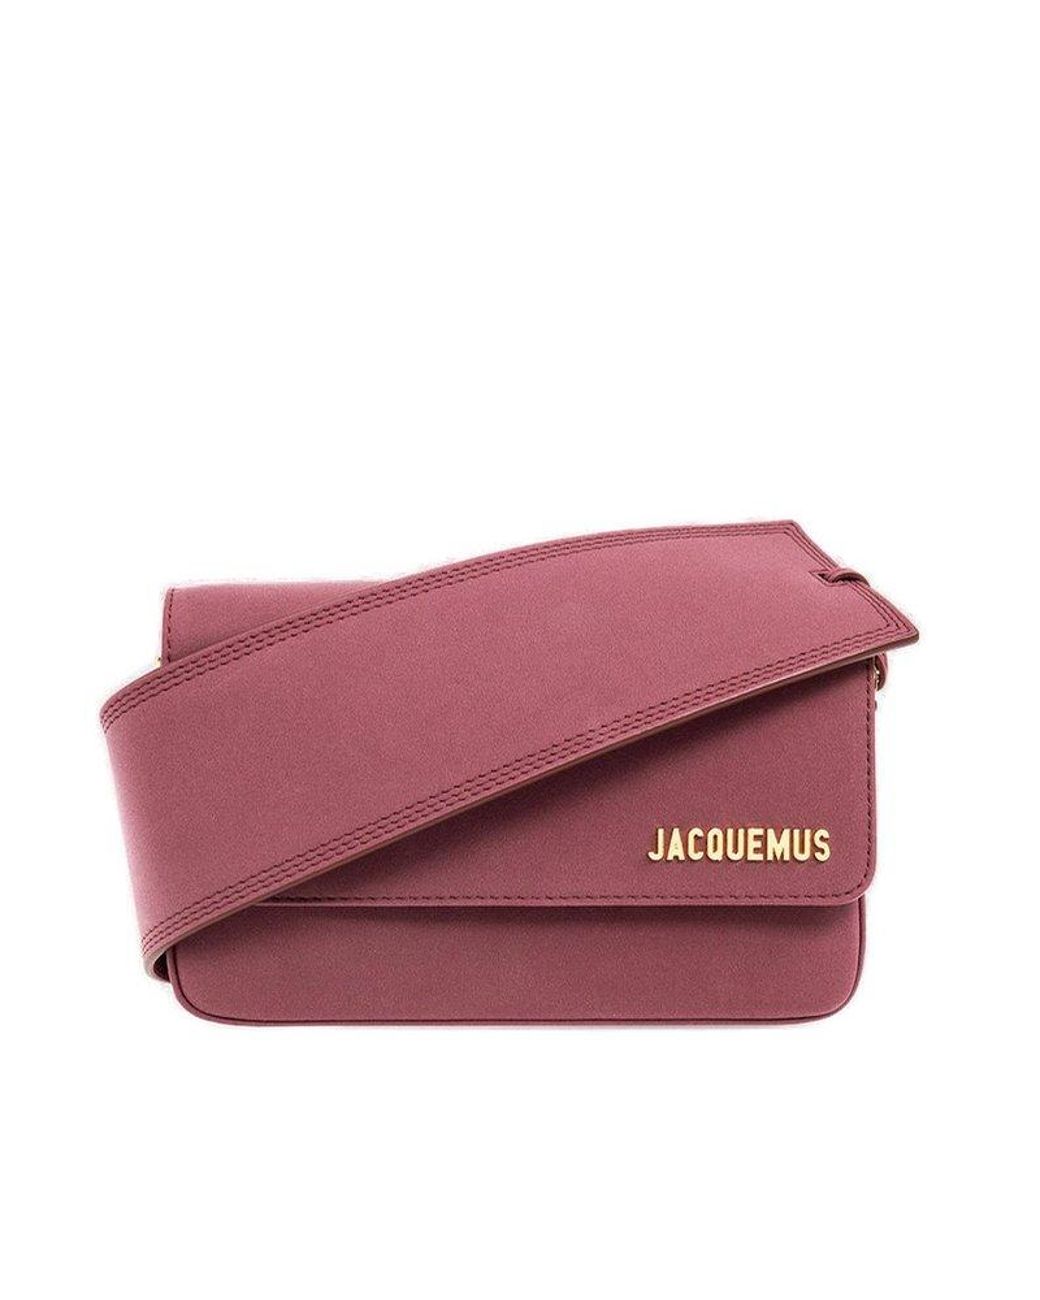 Jacquemus Le Carinu Flap Bag Leather Green 2201151